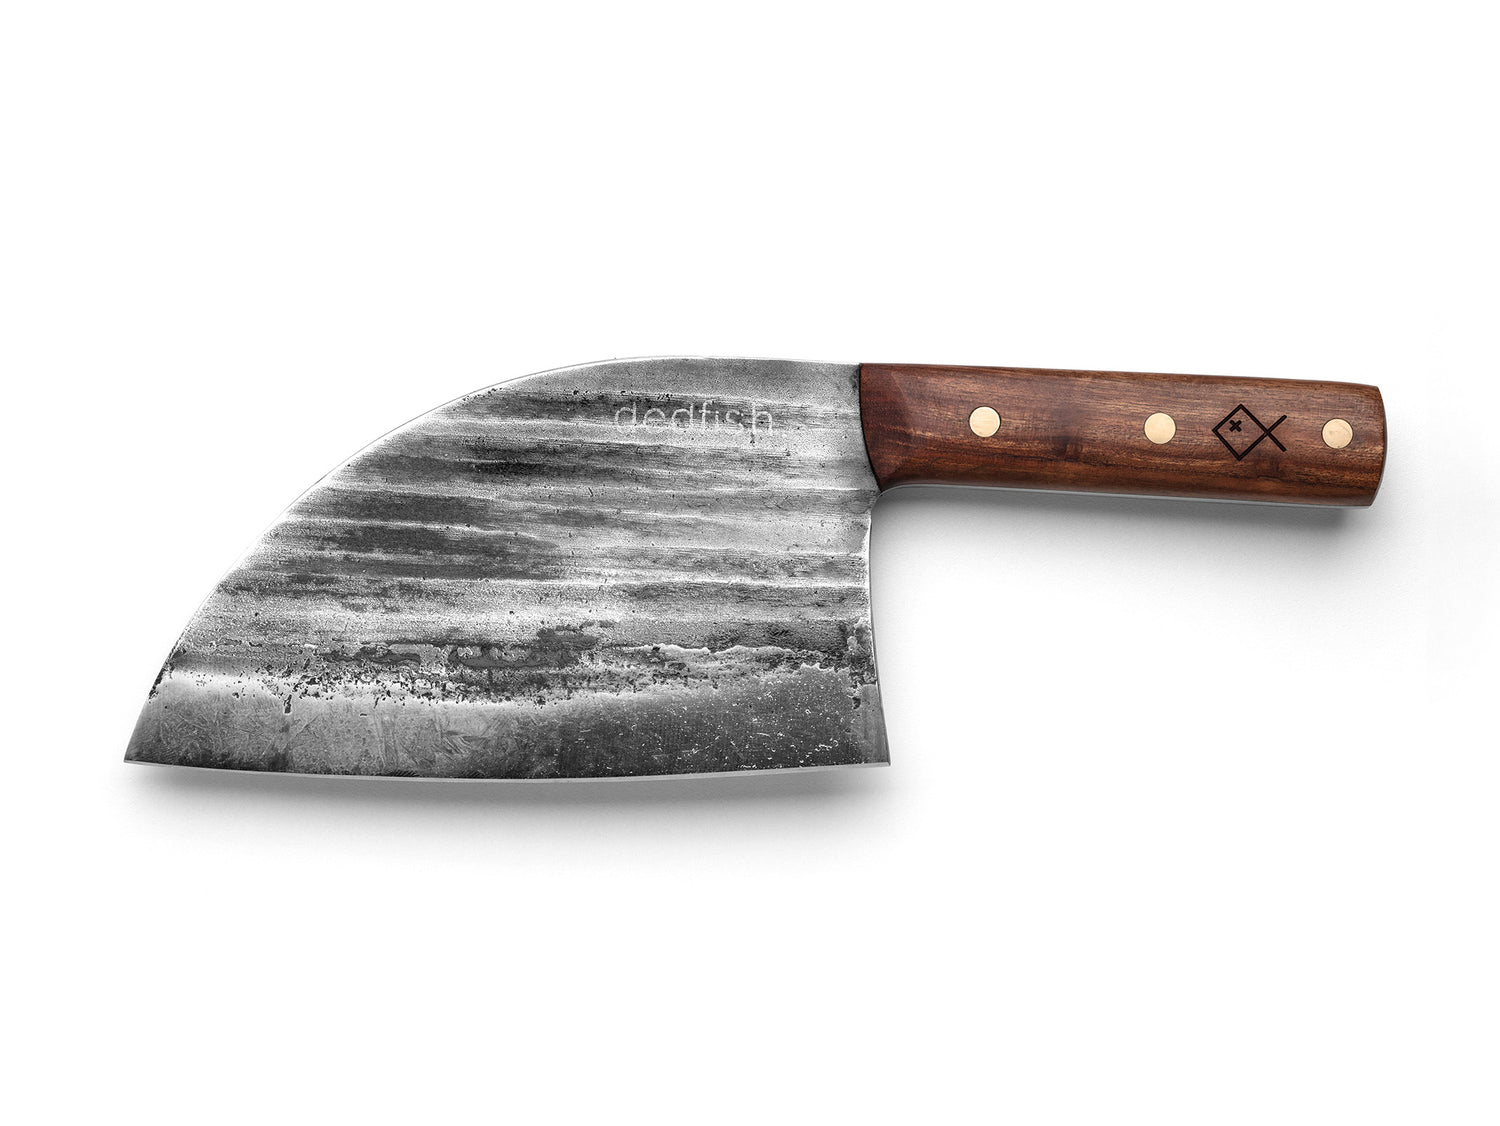 Dedfish Co. Kitchen Butcher Knife With Leather Sheath_5_cc